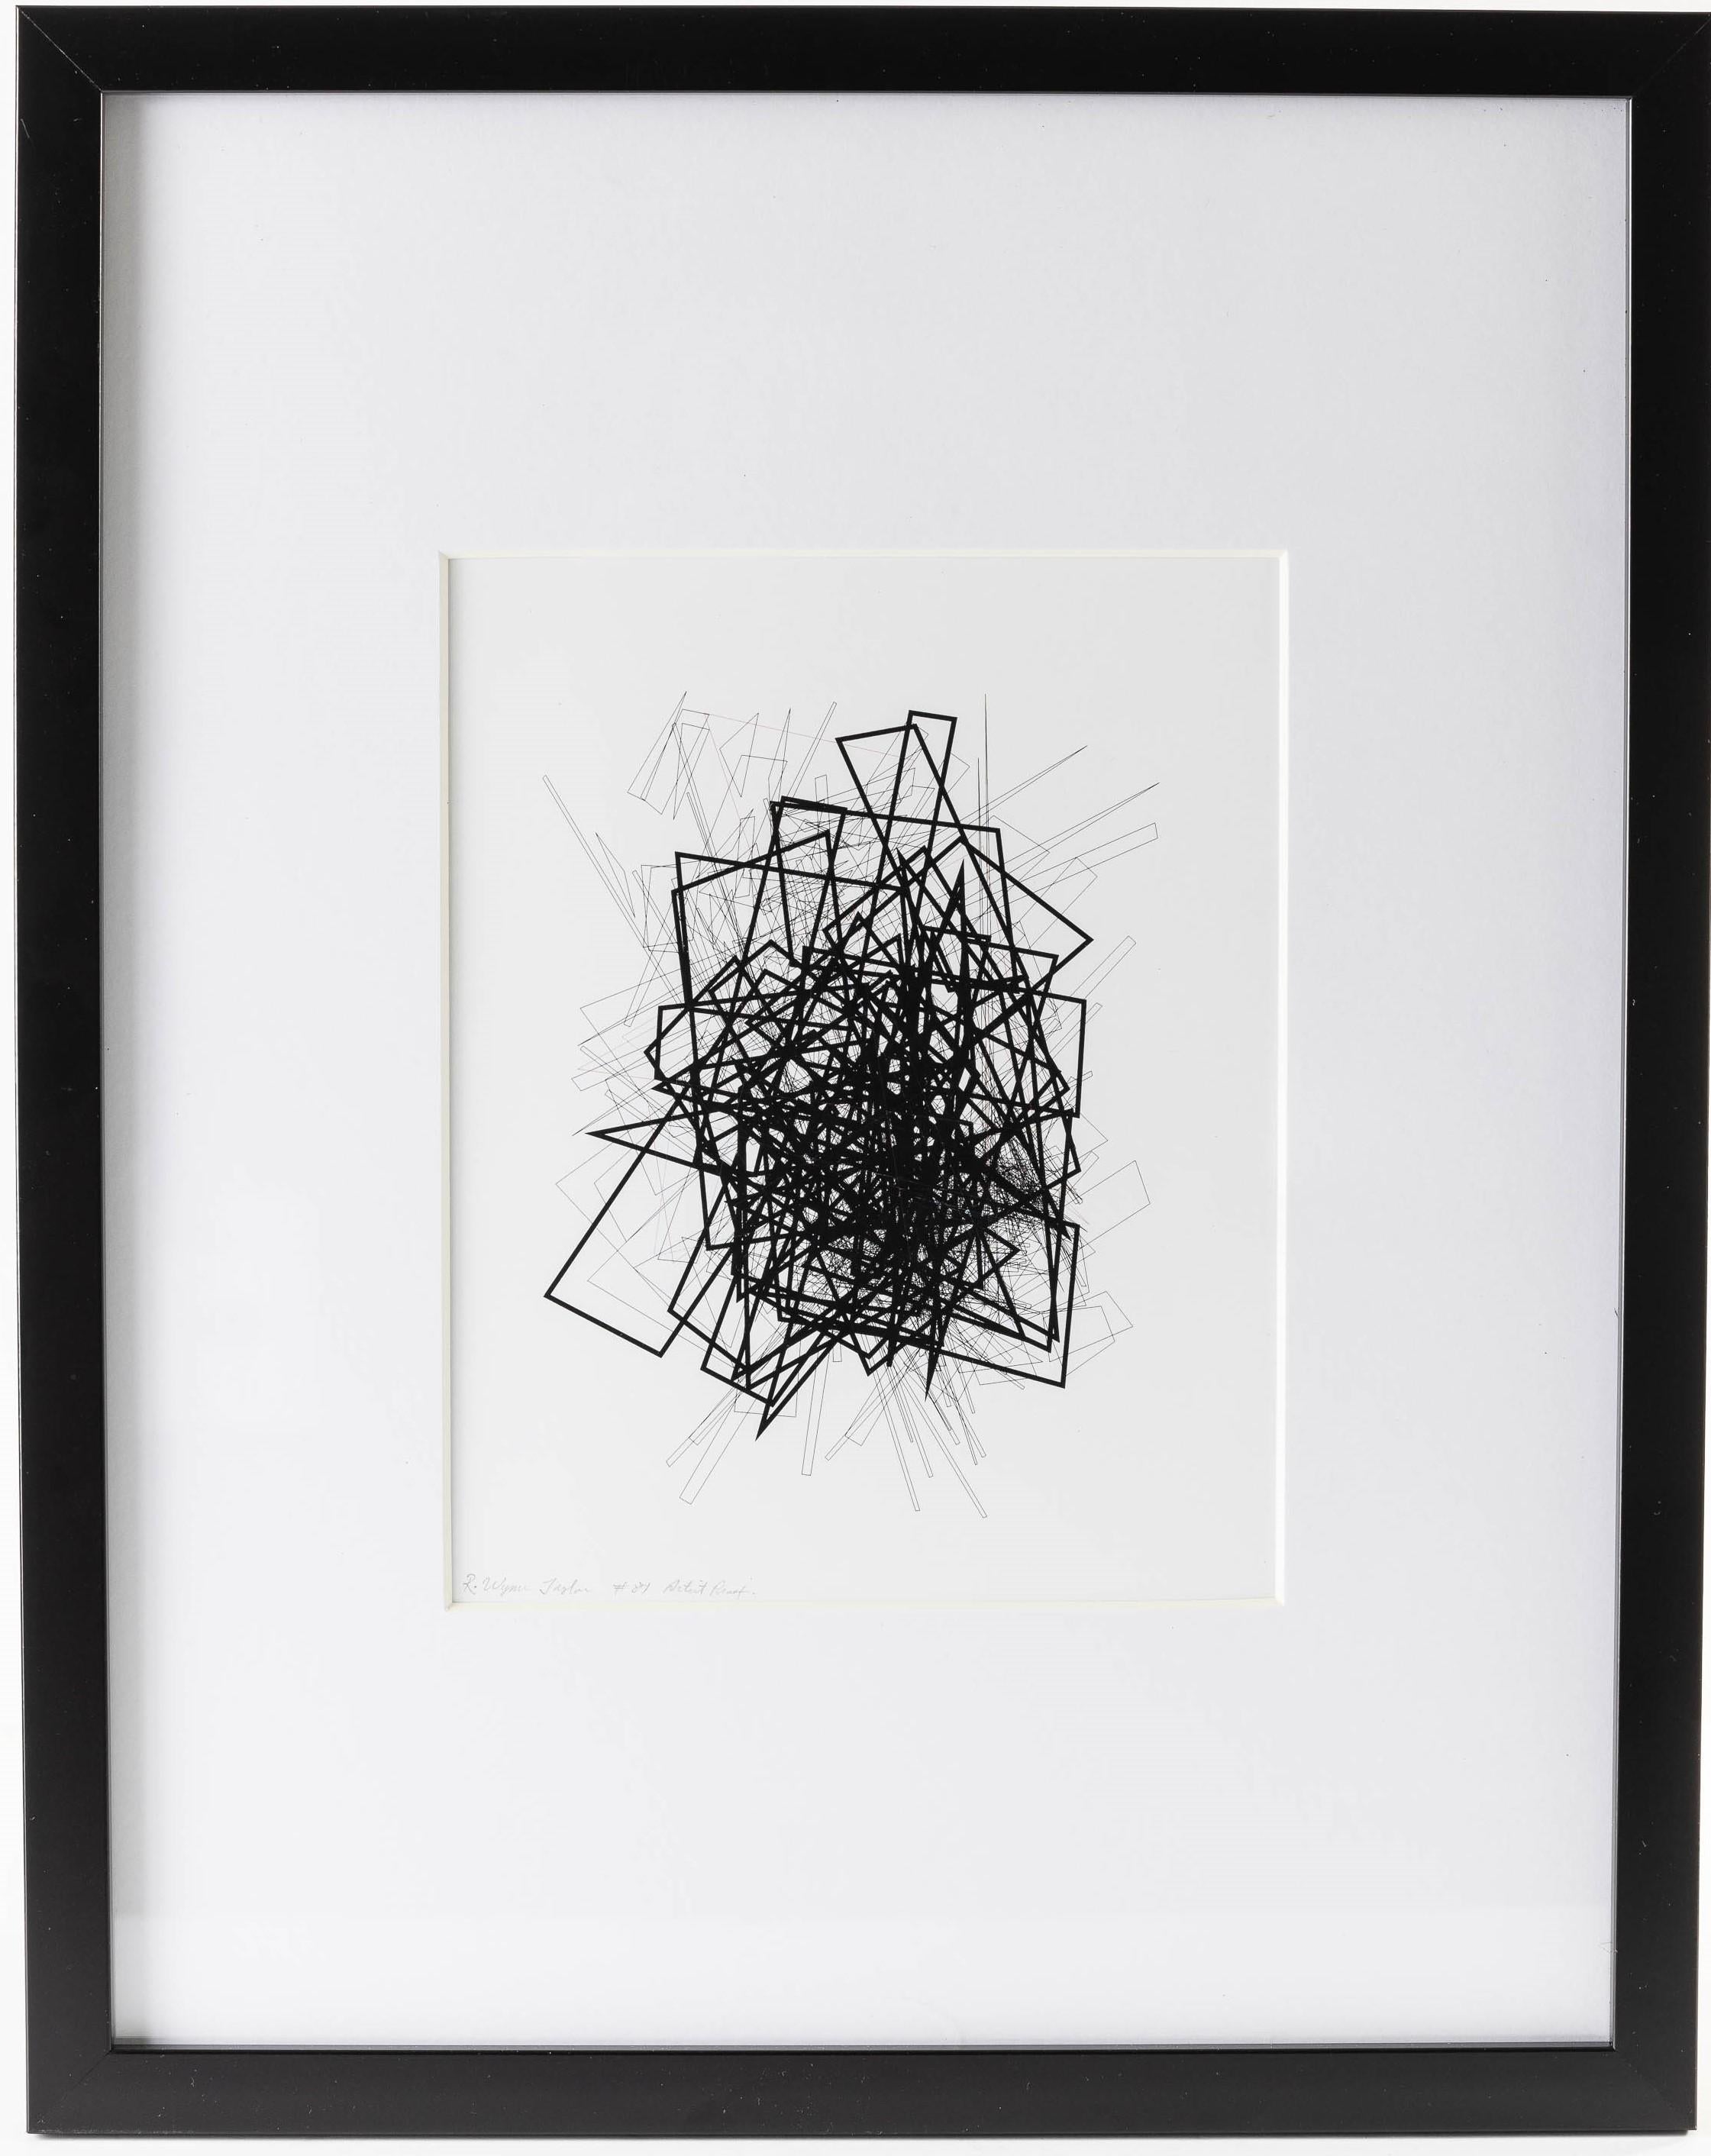 Robert Wynn Taylor Abstract Print – Zusammenfassung #84 